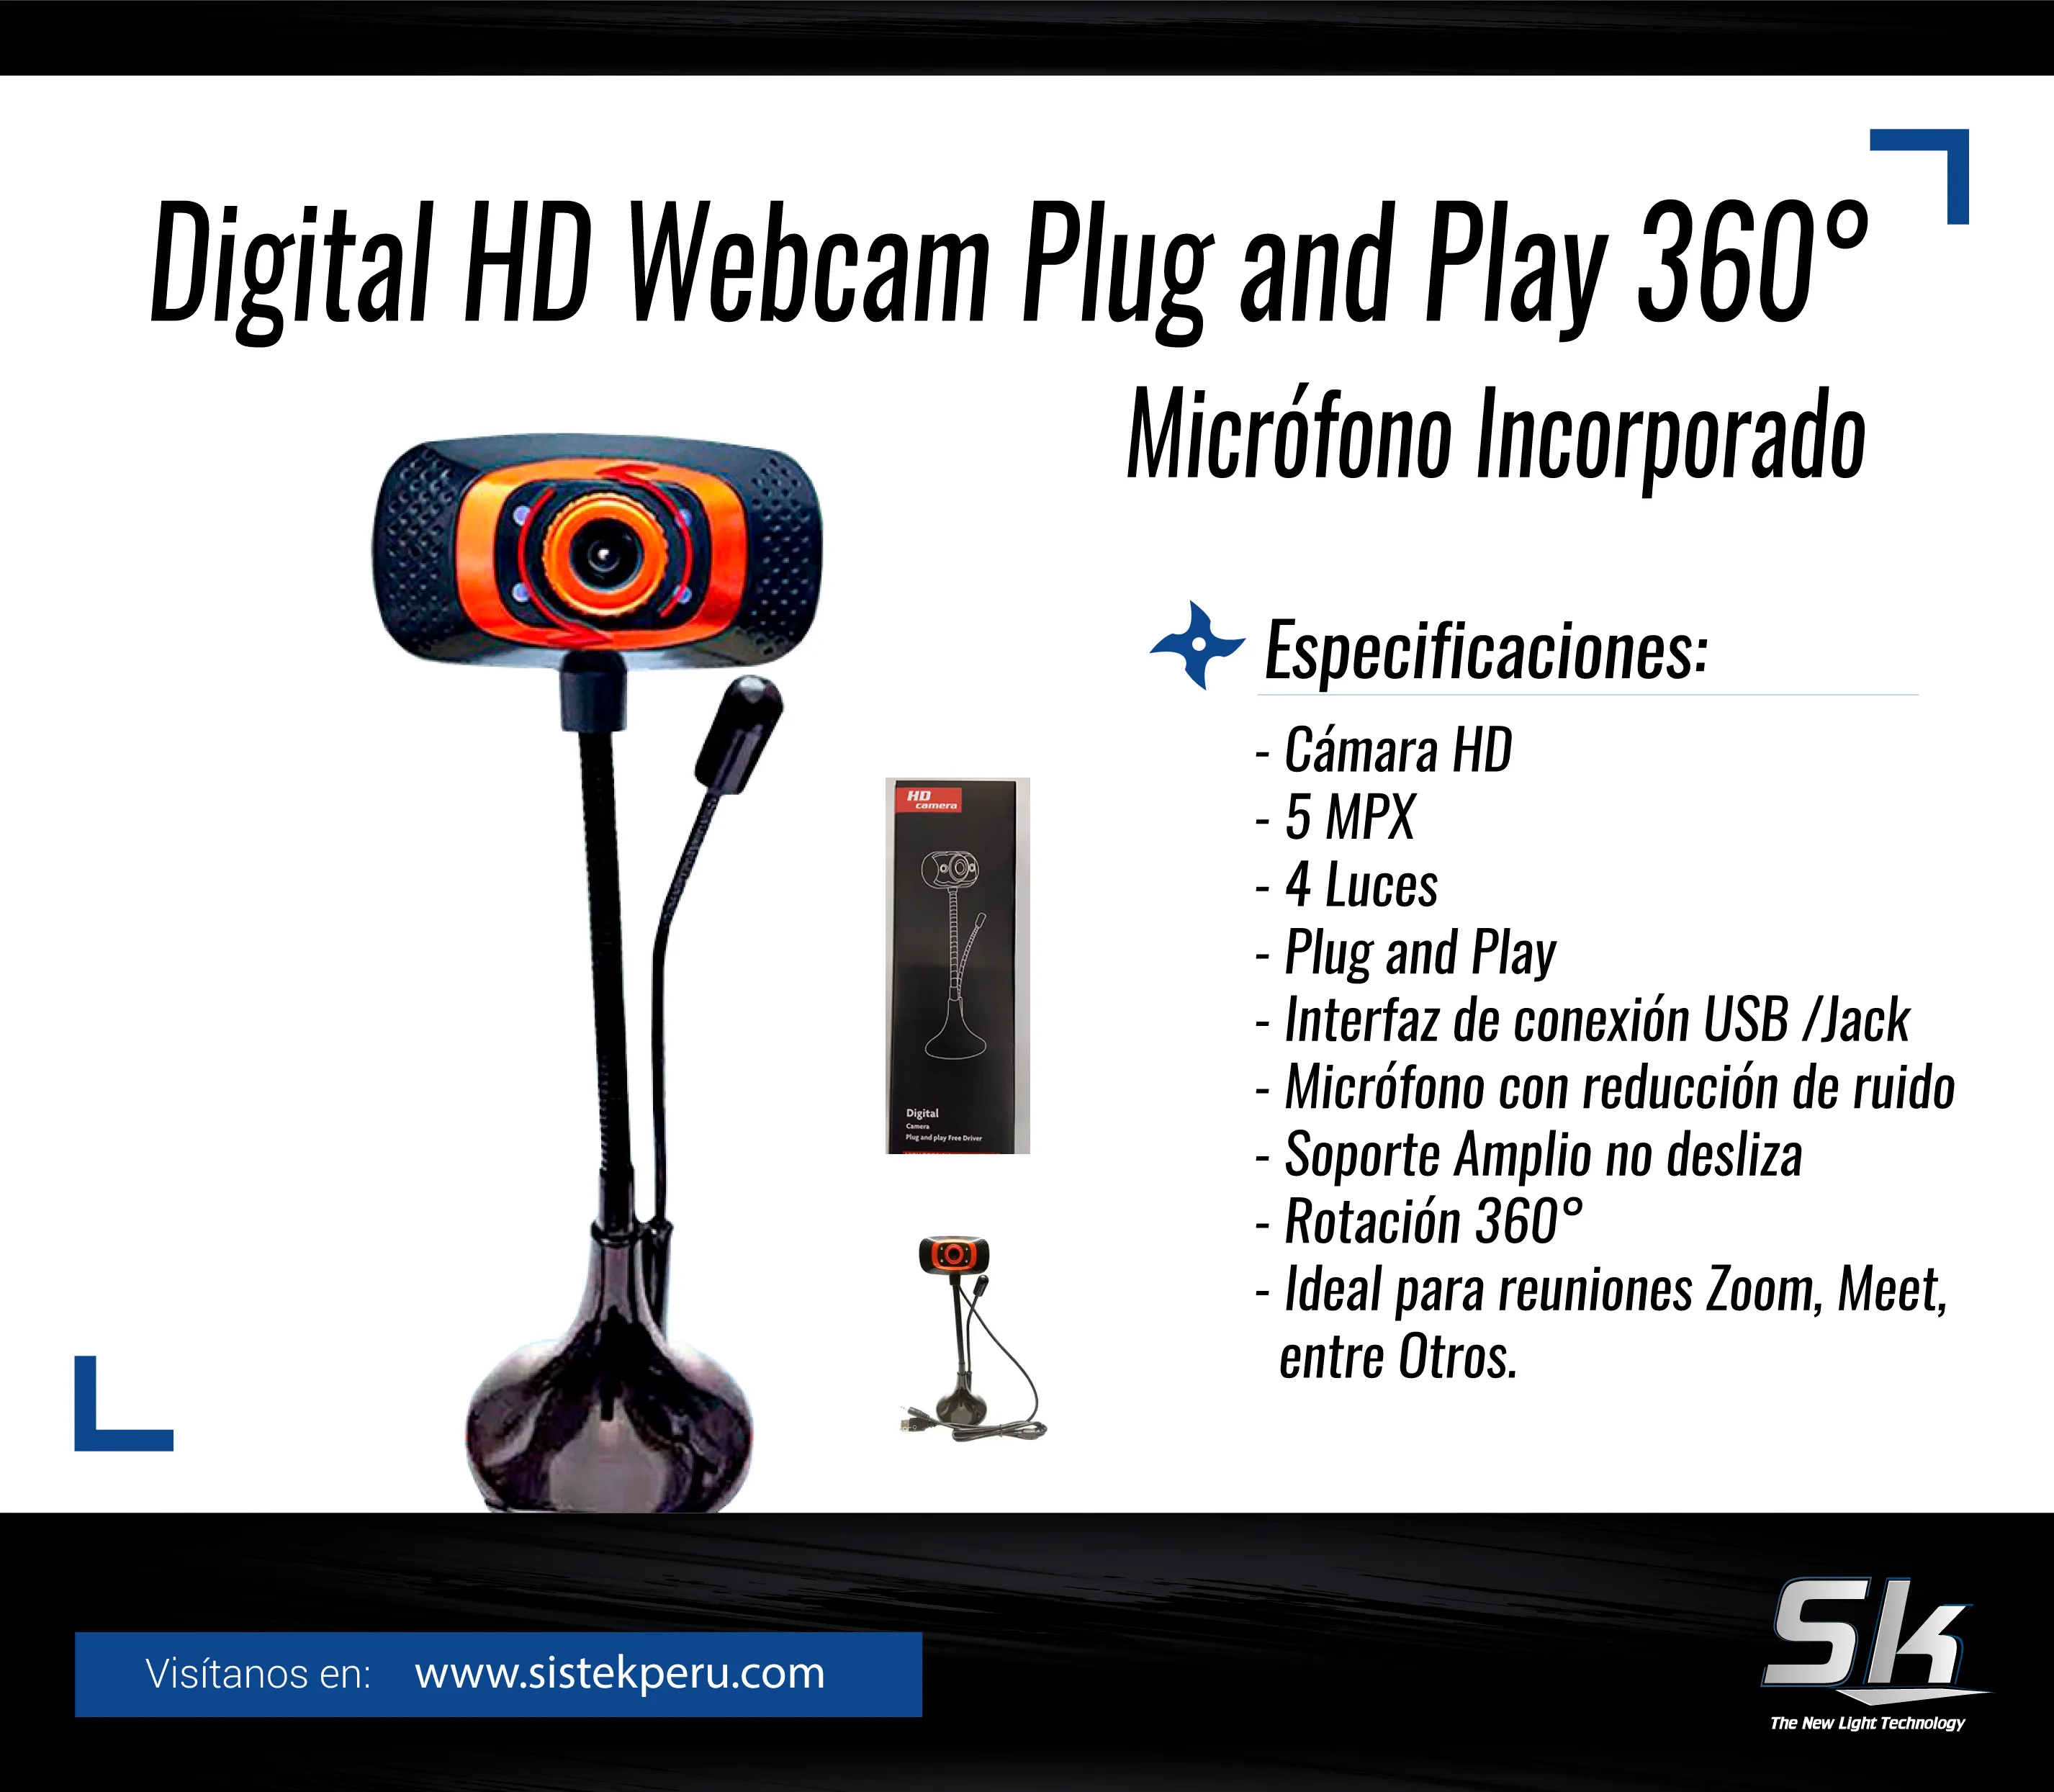 Digital HD Webcam Plug and Play 360grados microfono